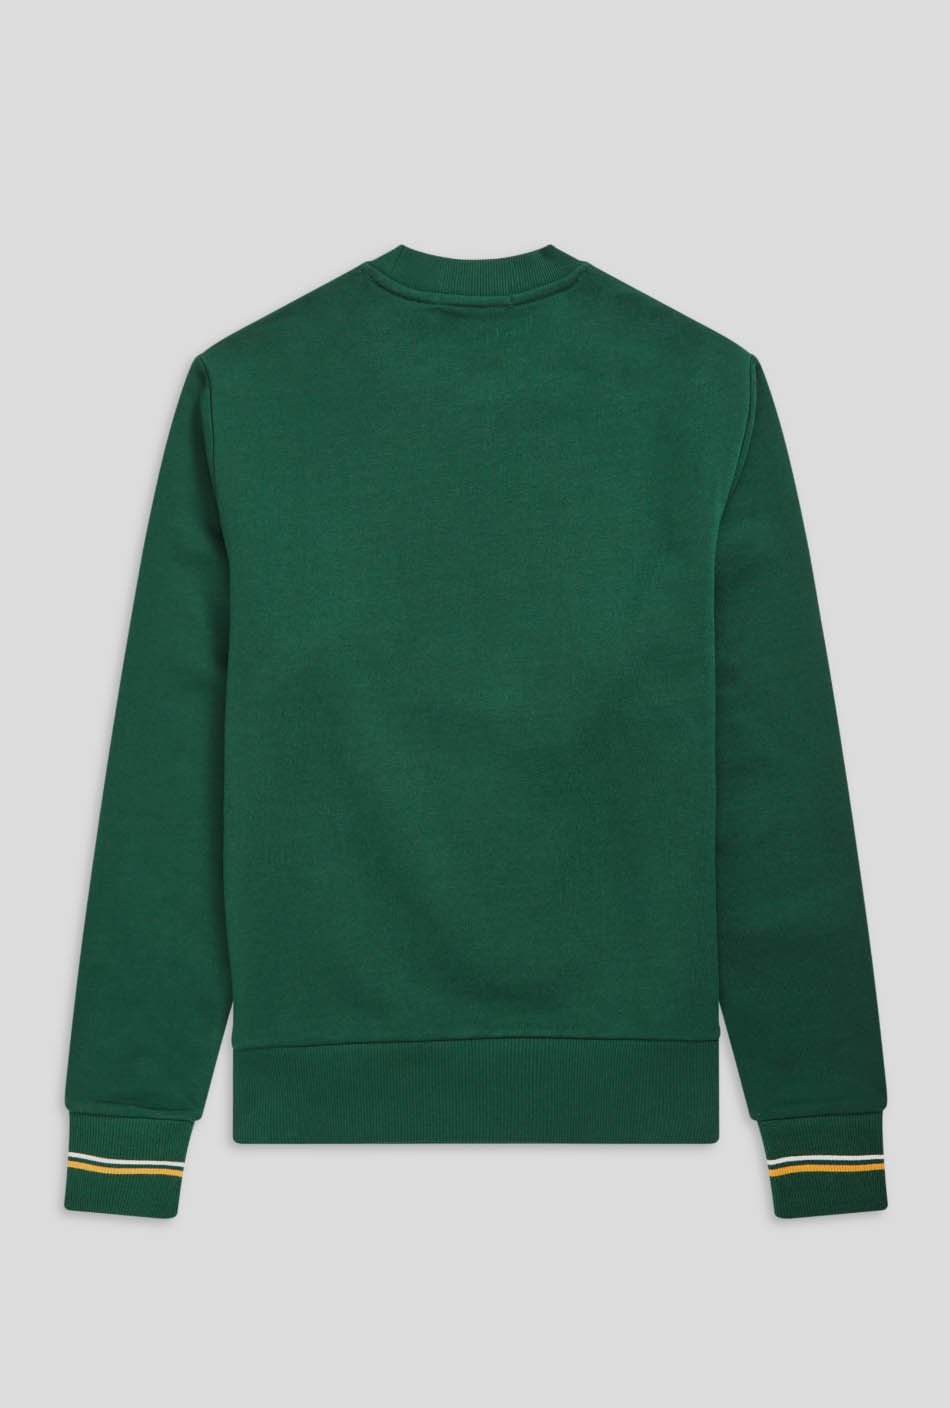 Fred Perry green sweatshirt